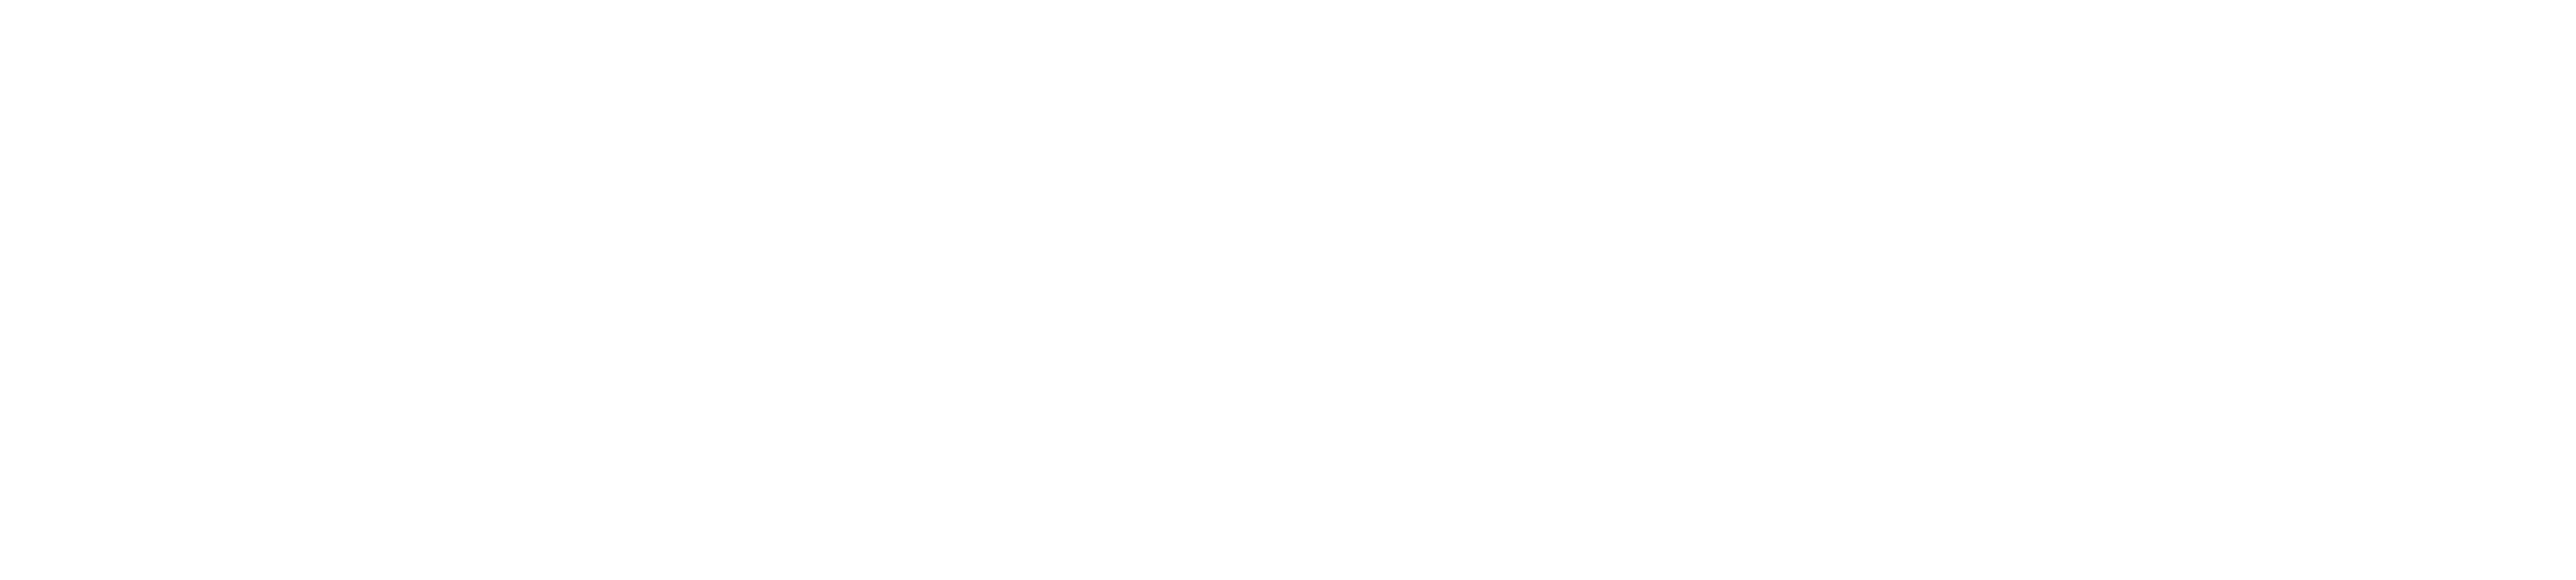 Smart at estimate - 無償版 -